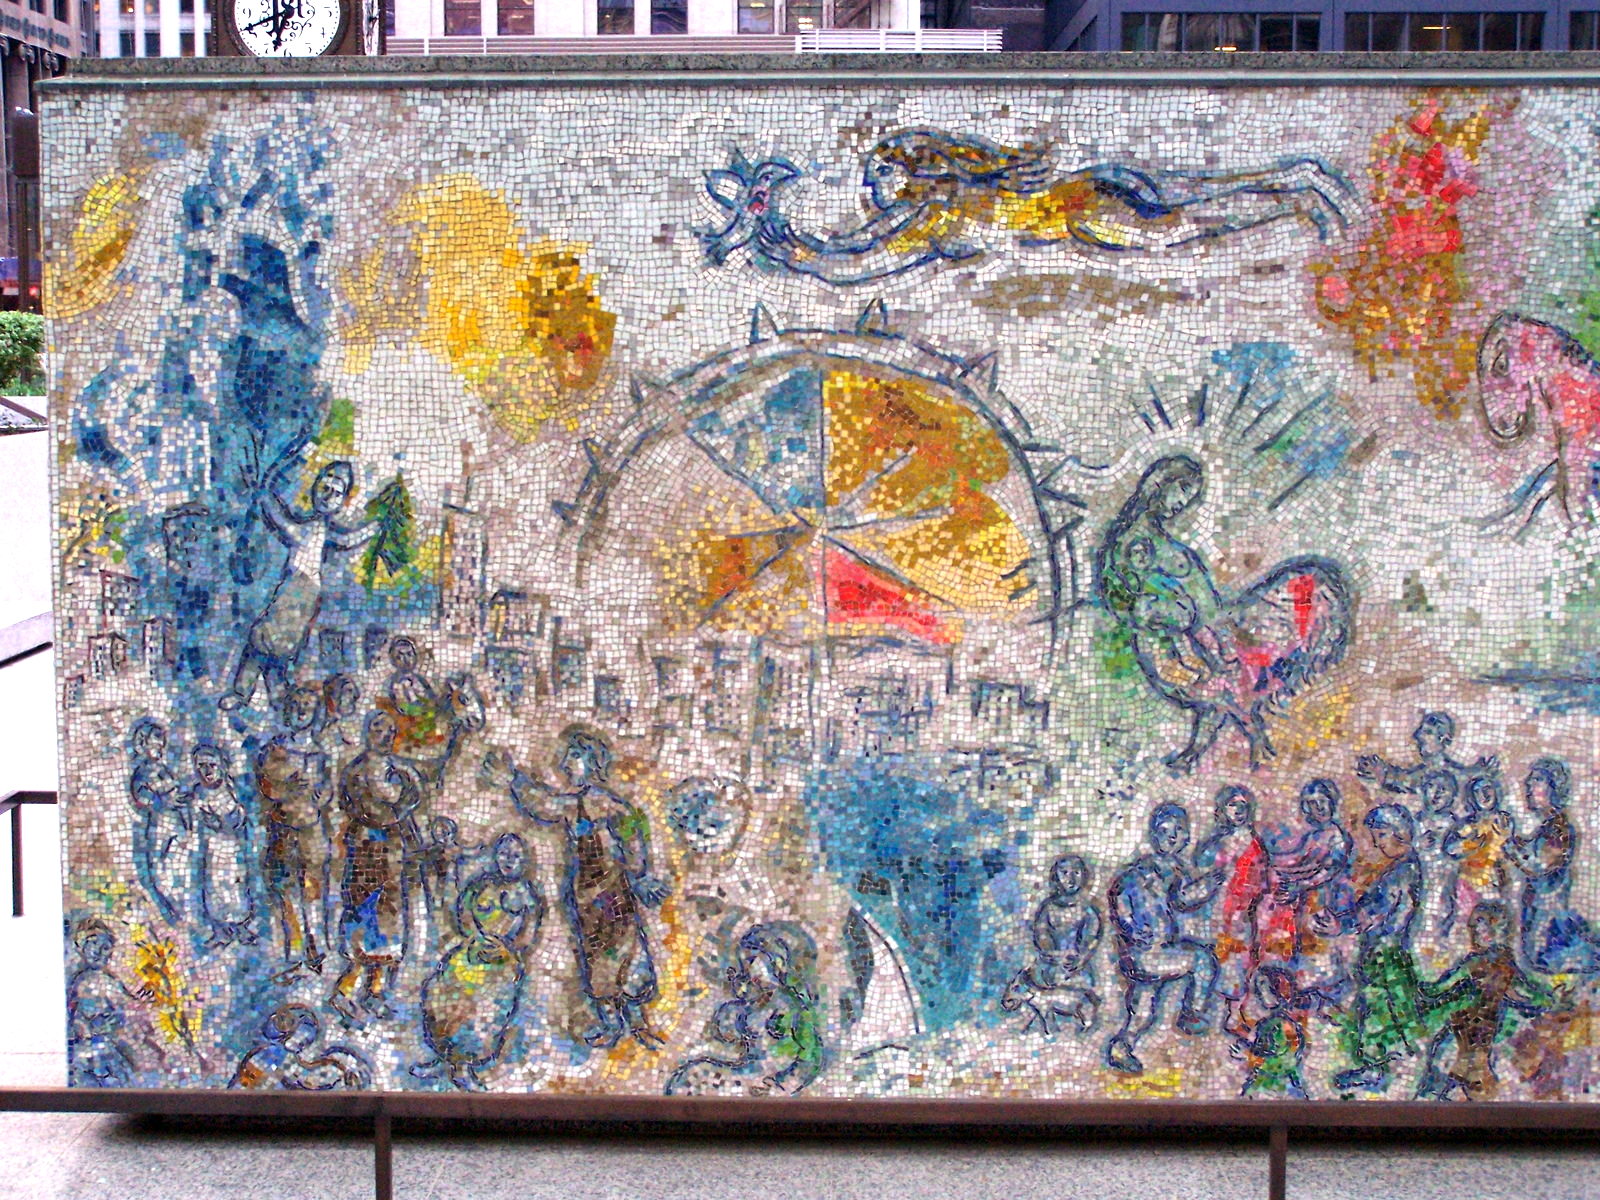 Chagall Mosaic “The Four Seasons”